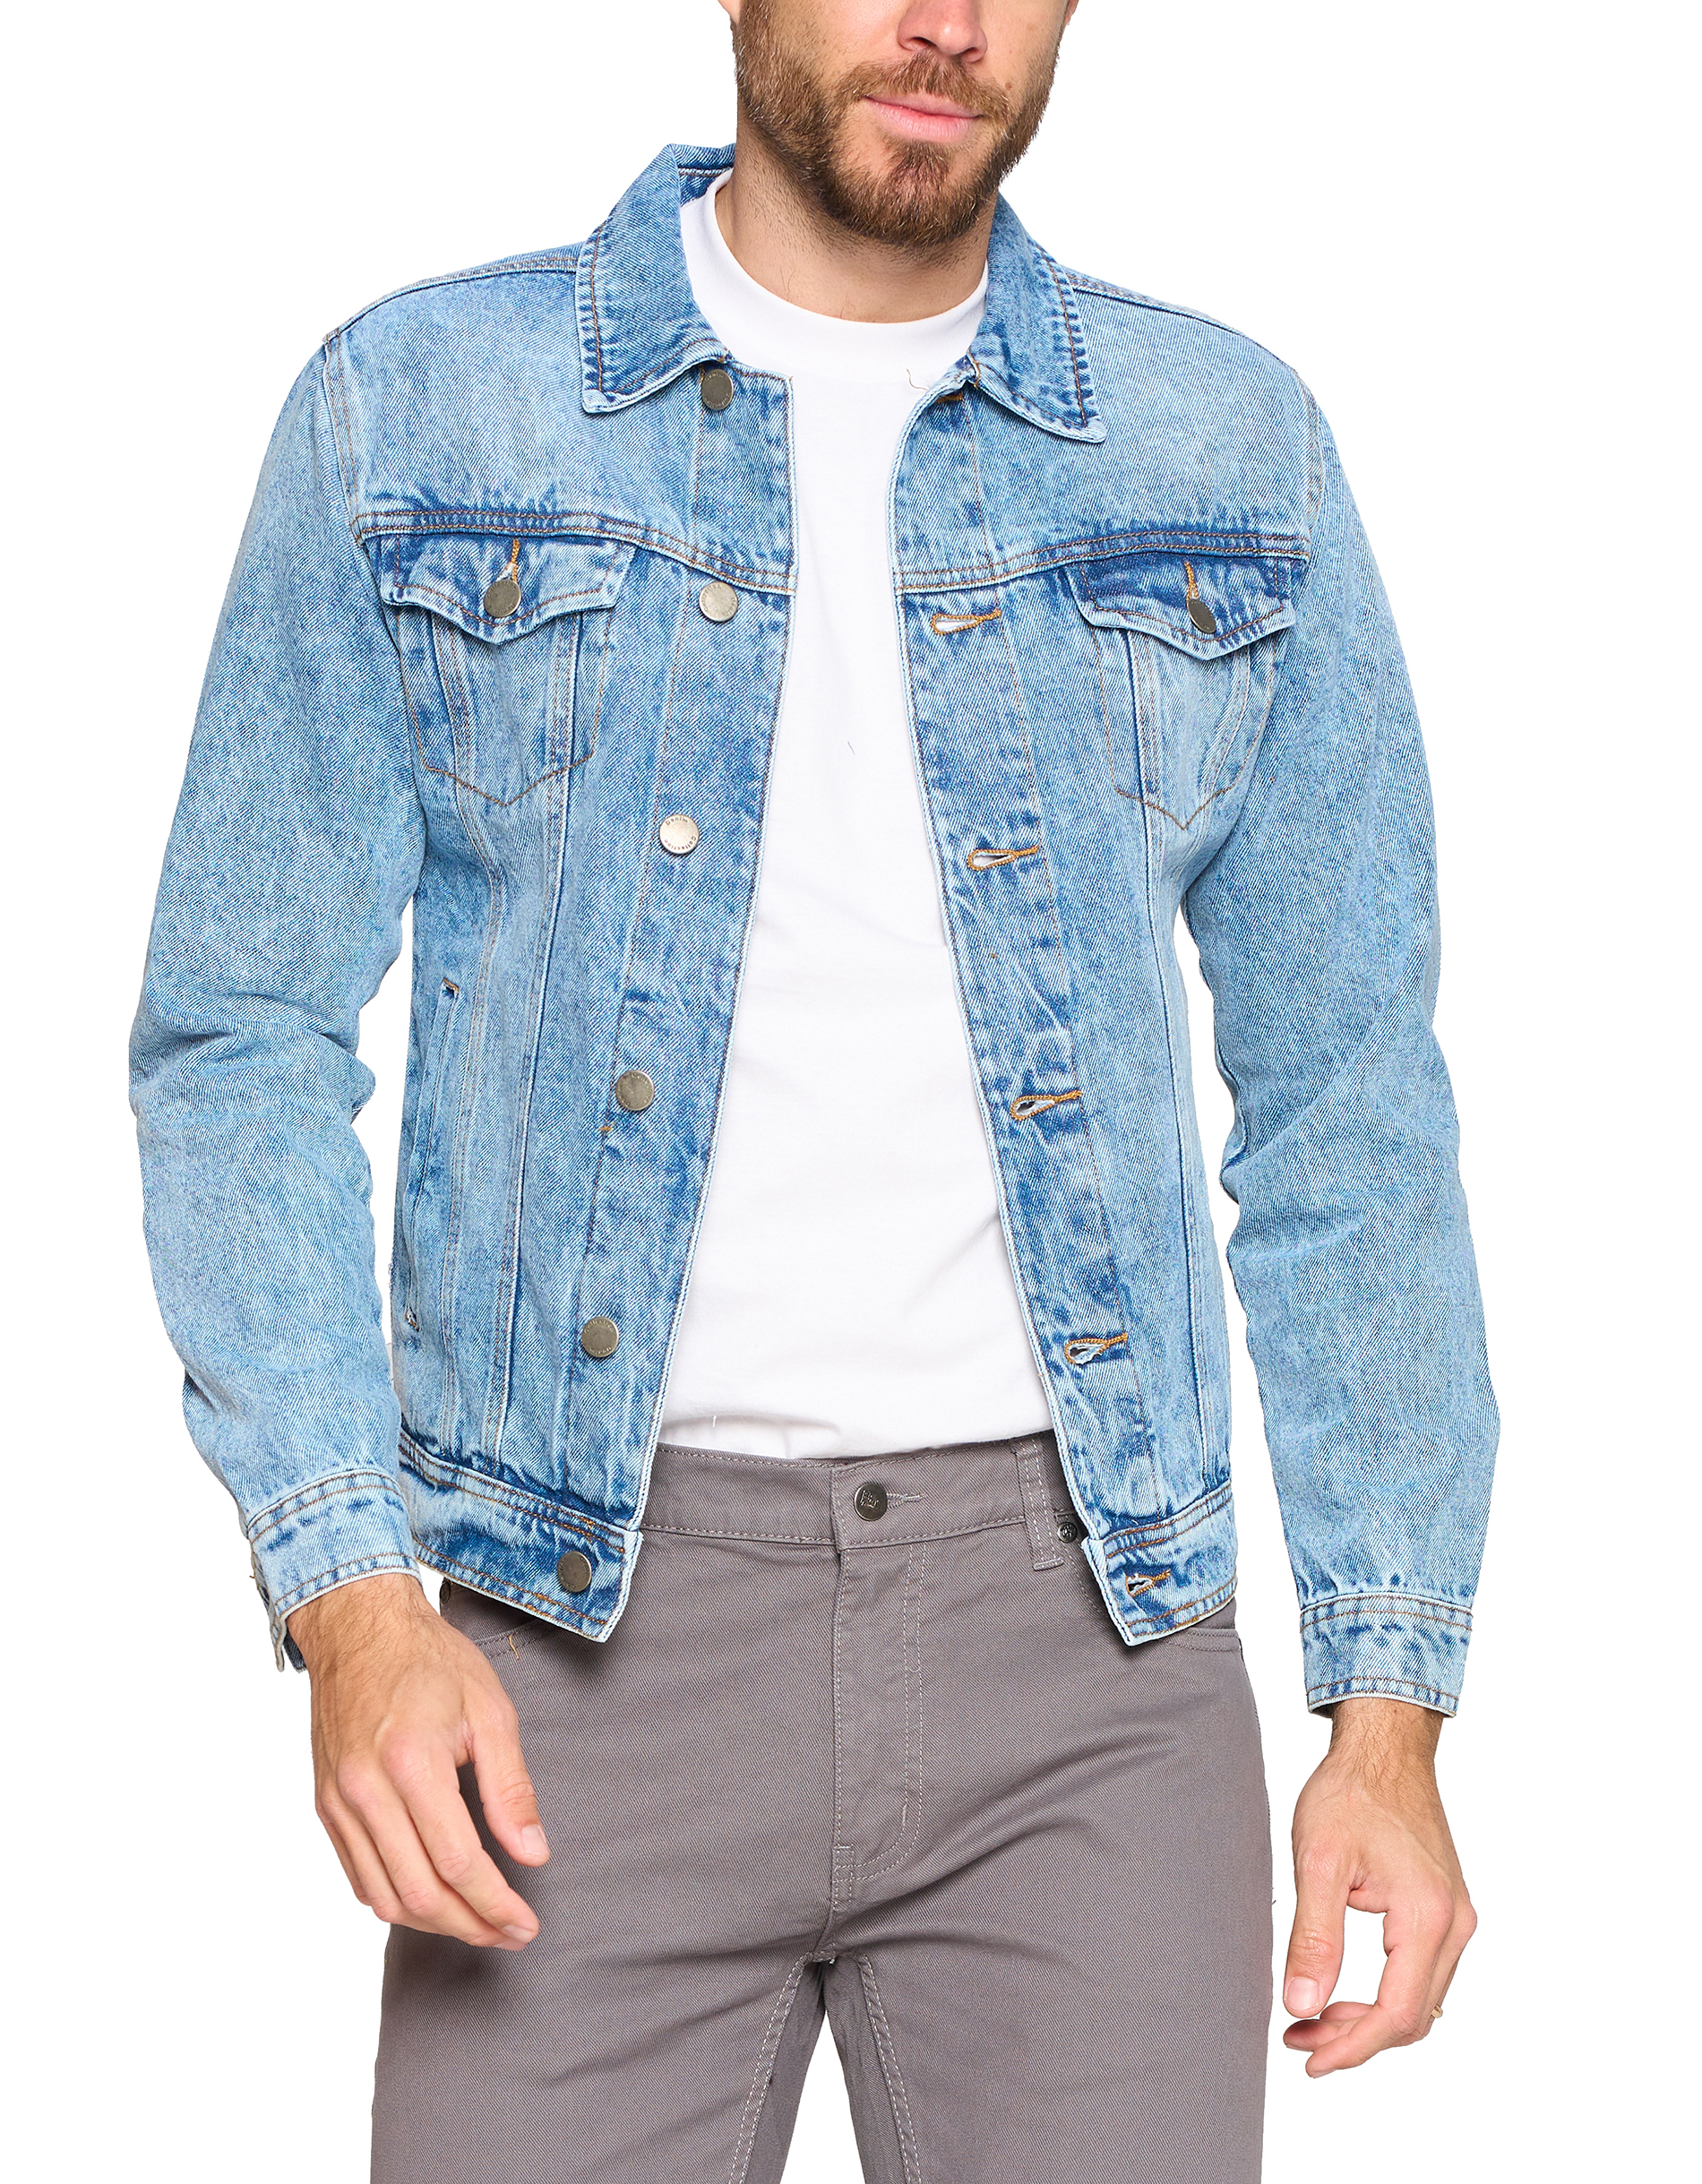 Red Label Men’s Premium Casual Faded Denim Jean Button Up Cotton Slim Fit Jacket (Light Blue, L) - image 1 of 7